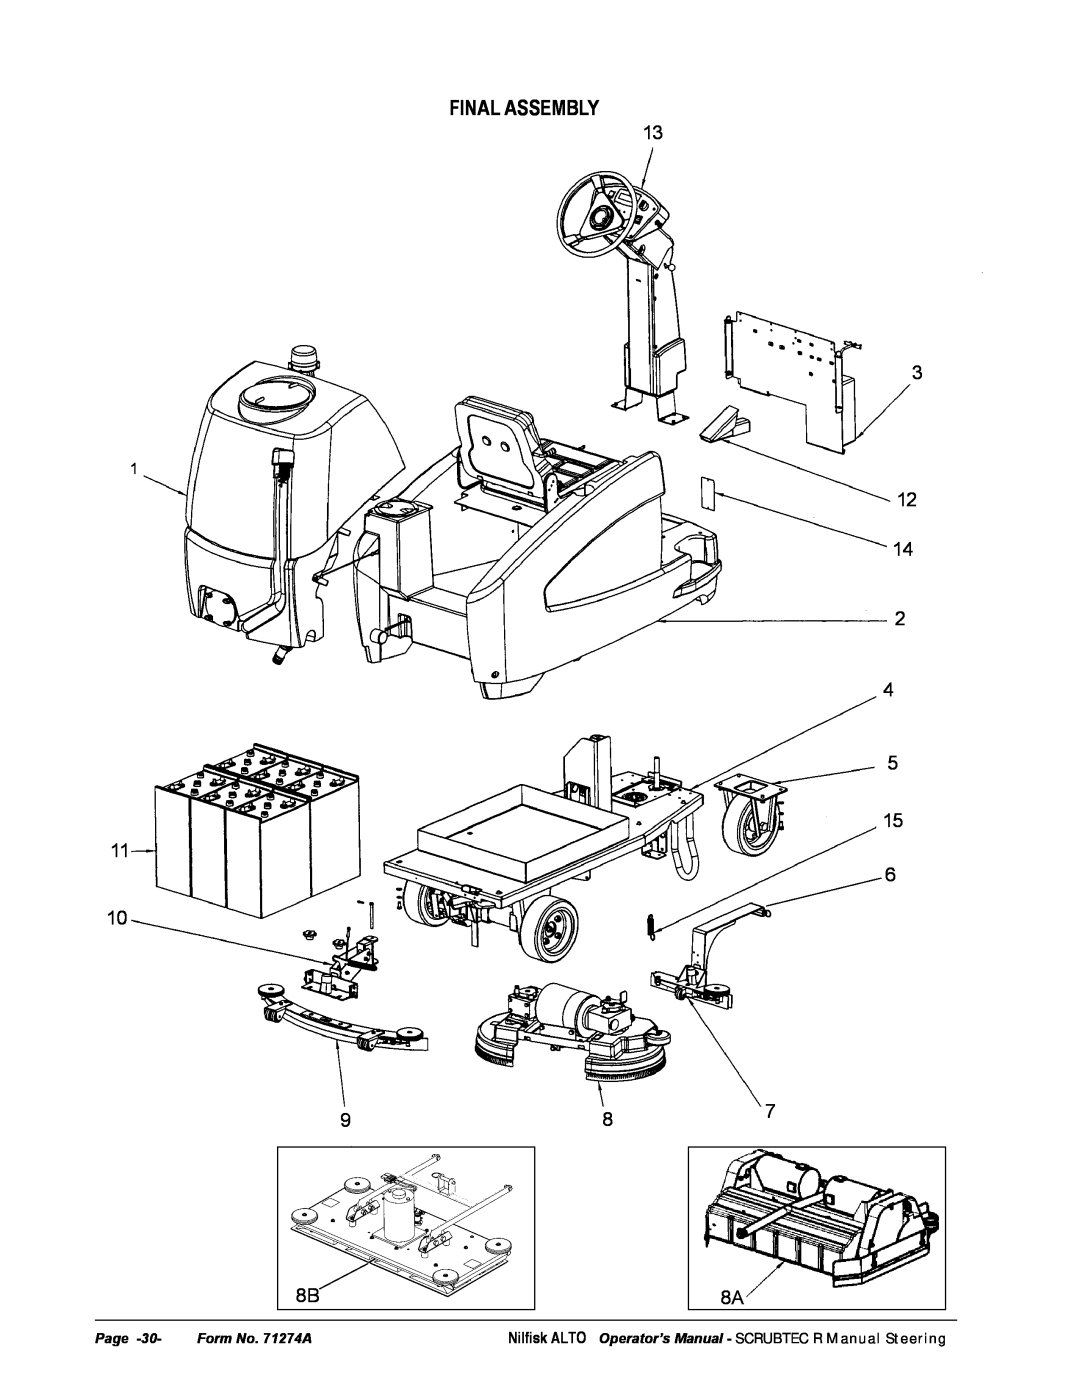 Nilfisk-ALTO 586, 571 Final Assembly, Page, Form No. 71274A, Nilﬁsk ALTO Operator’s Manual - SCRUBTEC R Manual Steering 